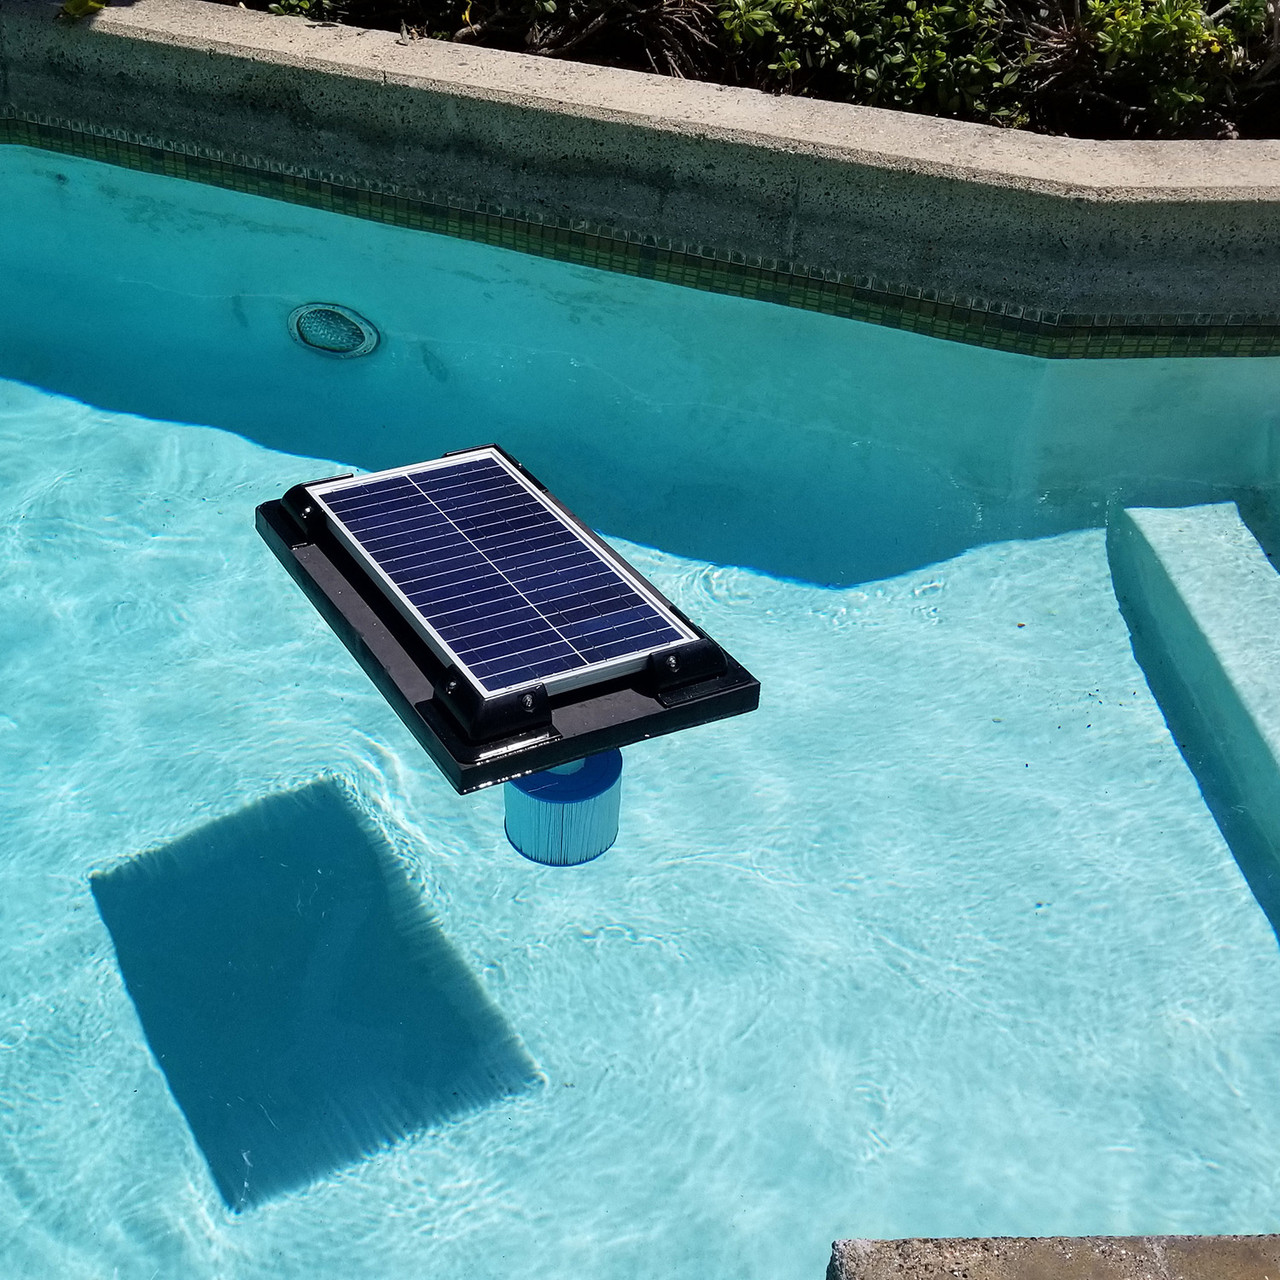 Brink Mål korn Savior 5,000 Gallon Pool or Spa 30-watt Solar Pump and Filter System Solar  Pool Cleaner